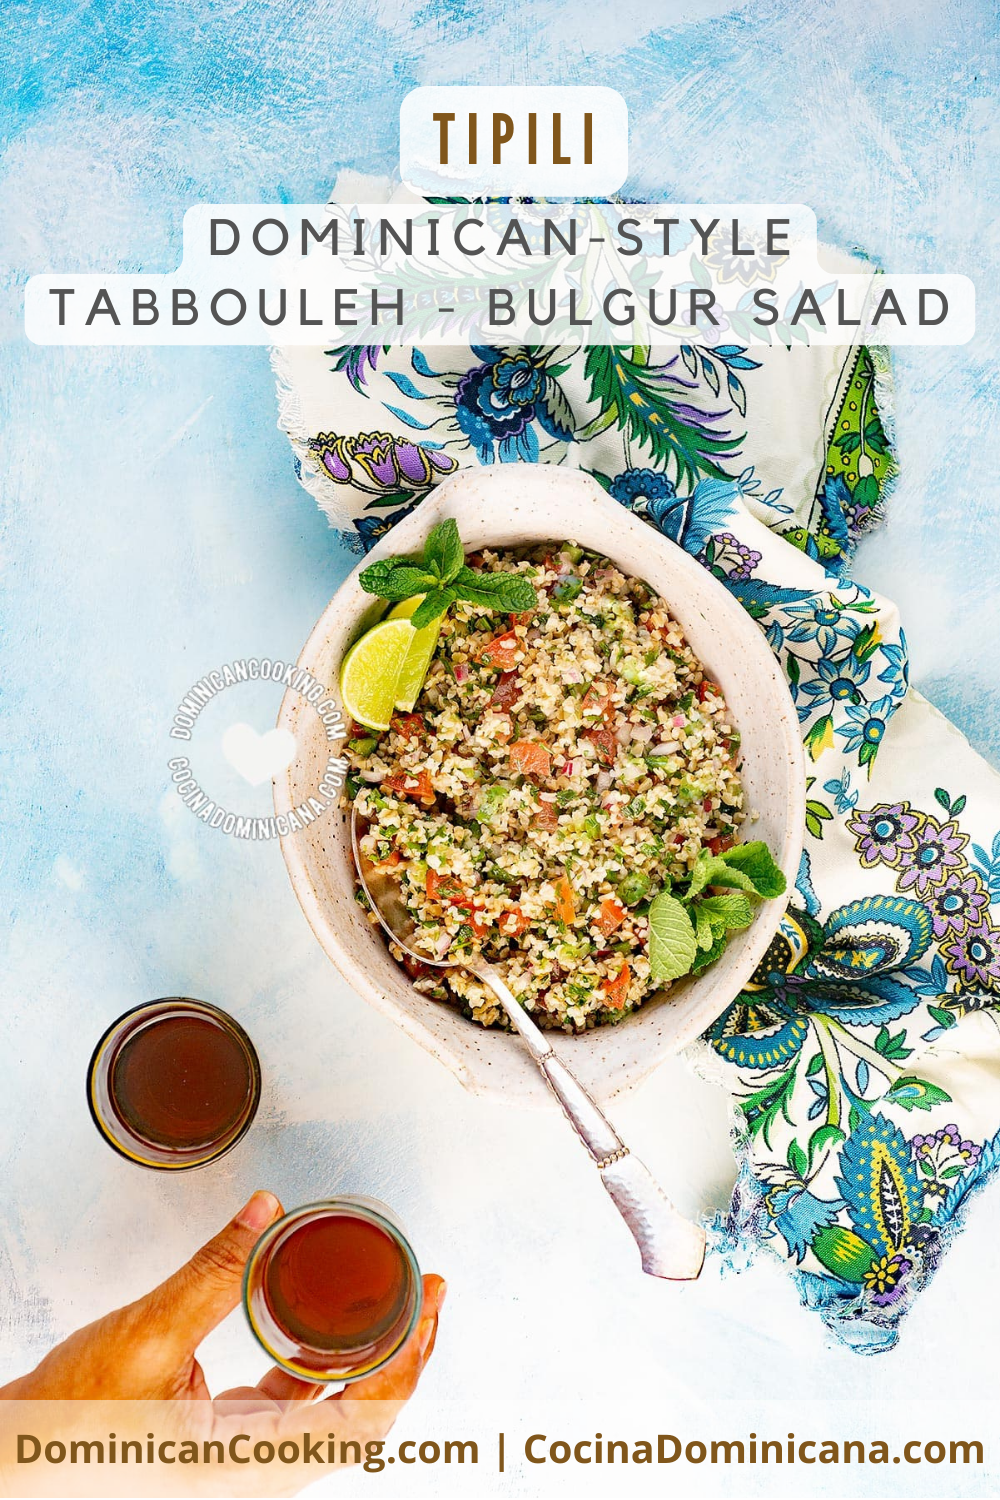 Tipili- Dominican style tabbouleh bulgur salad recipe.